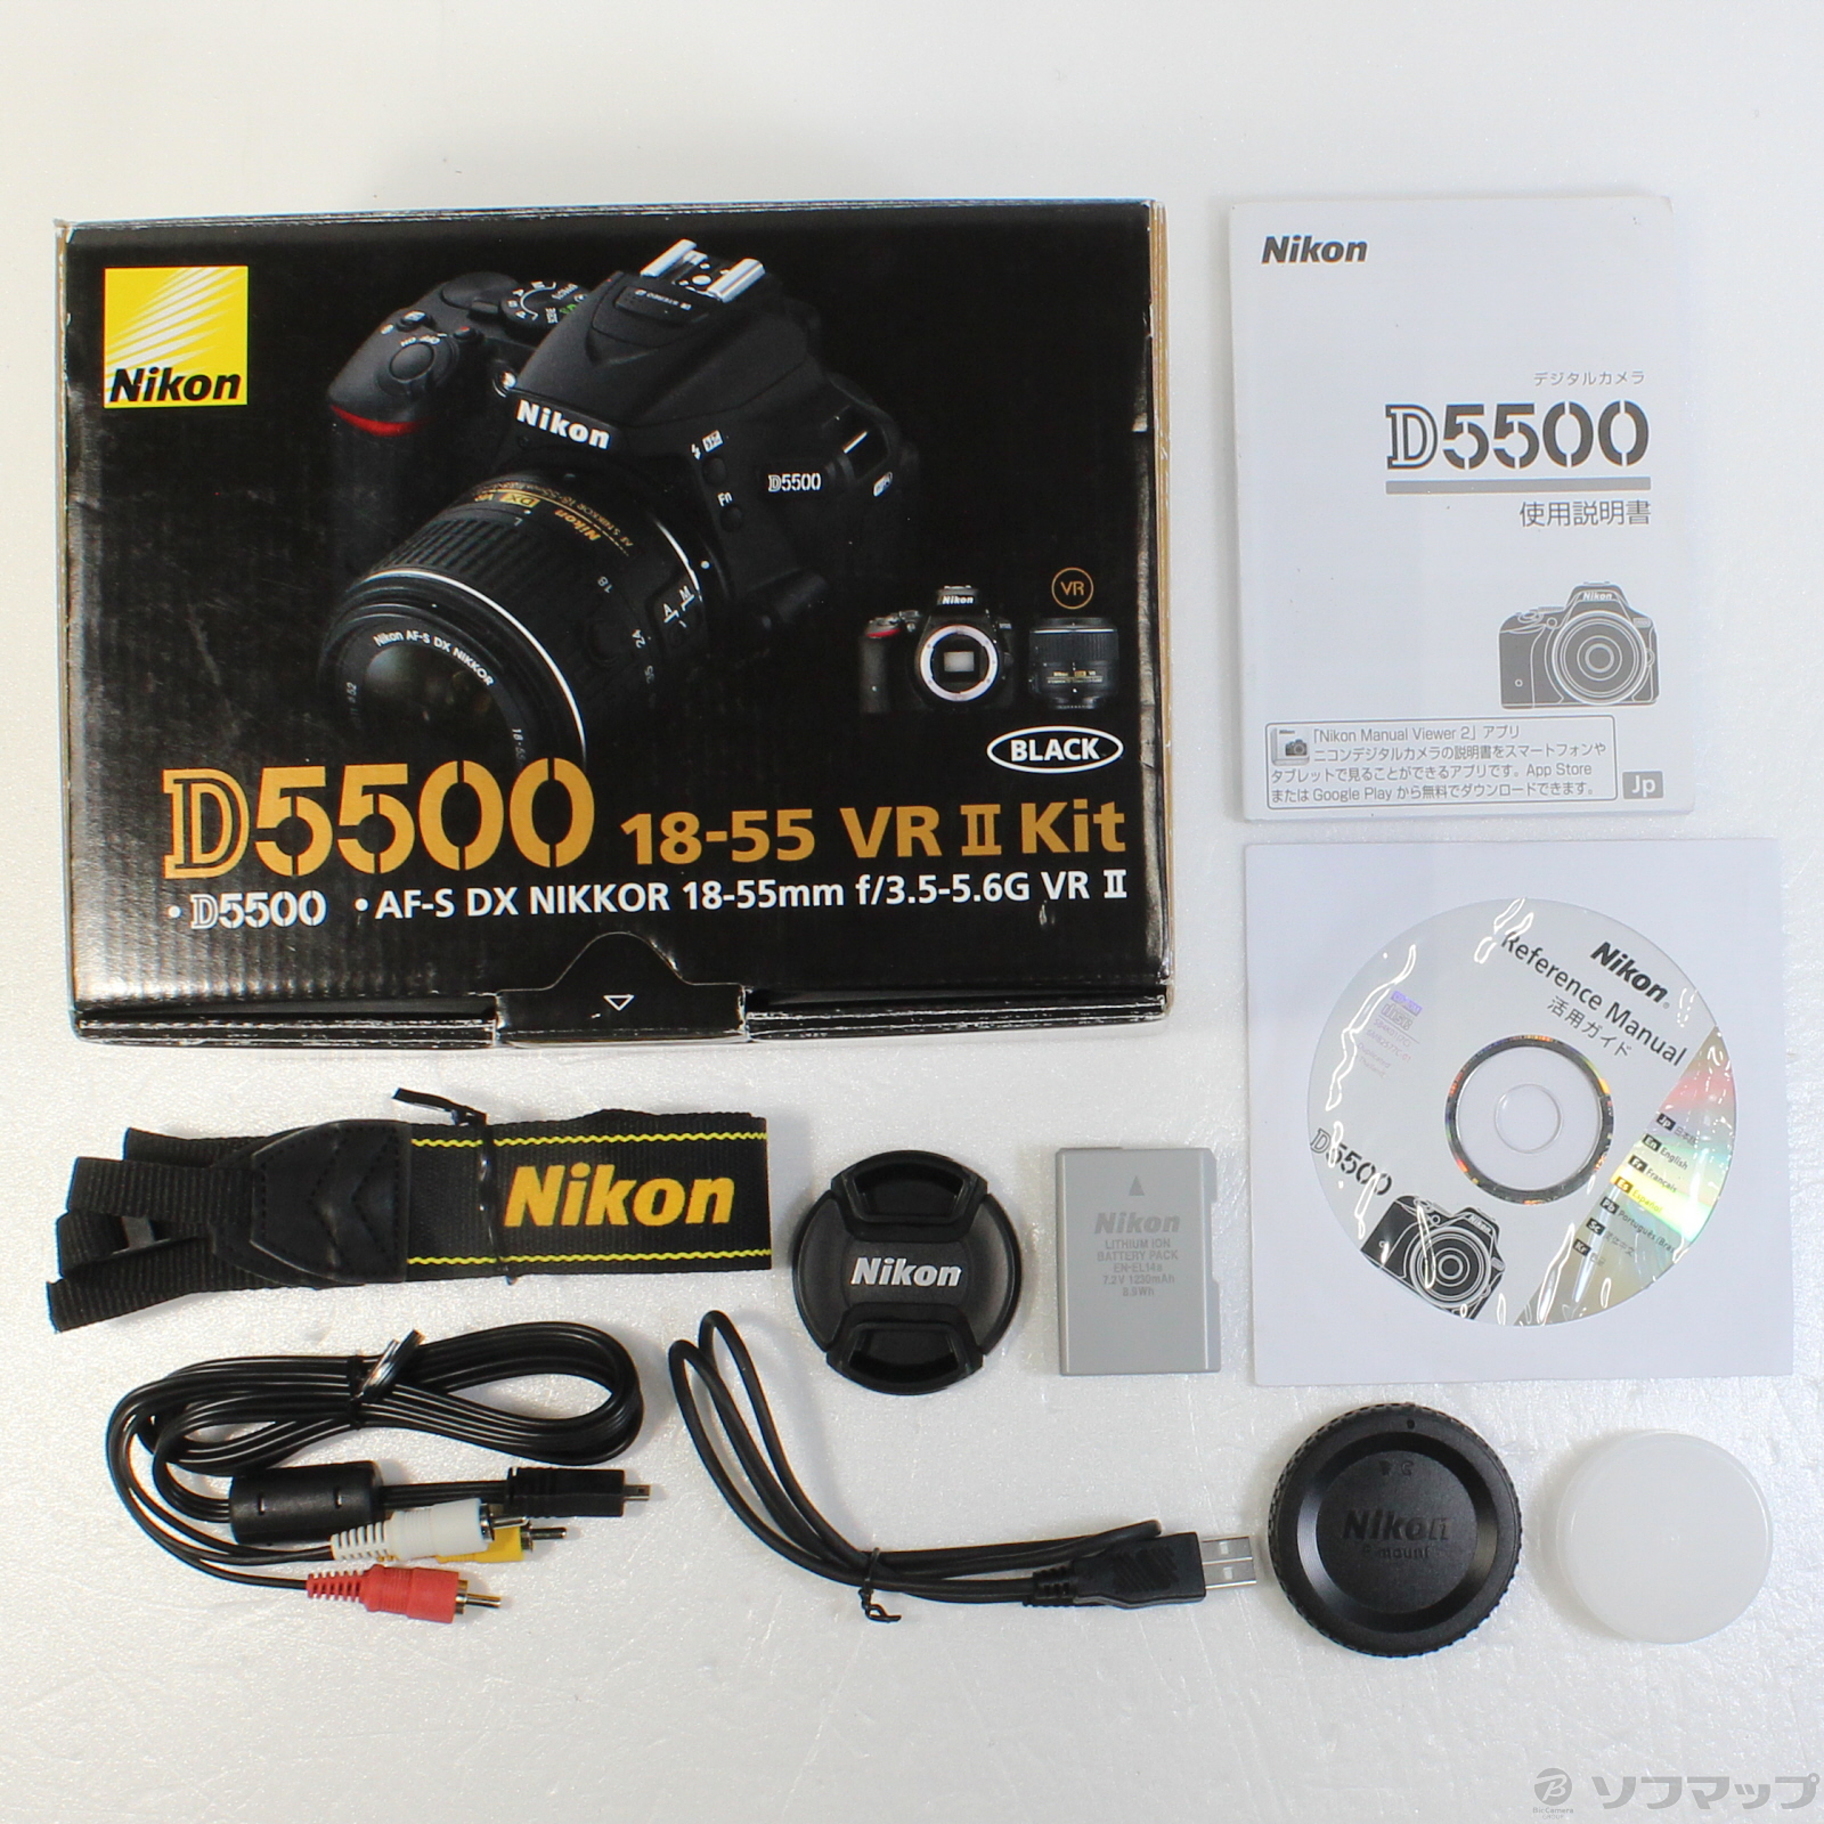 Nikon D5500 18-55 VRⅡ Kitカメラ | www.hostaljuarez.com